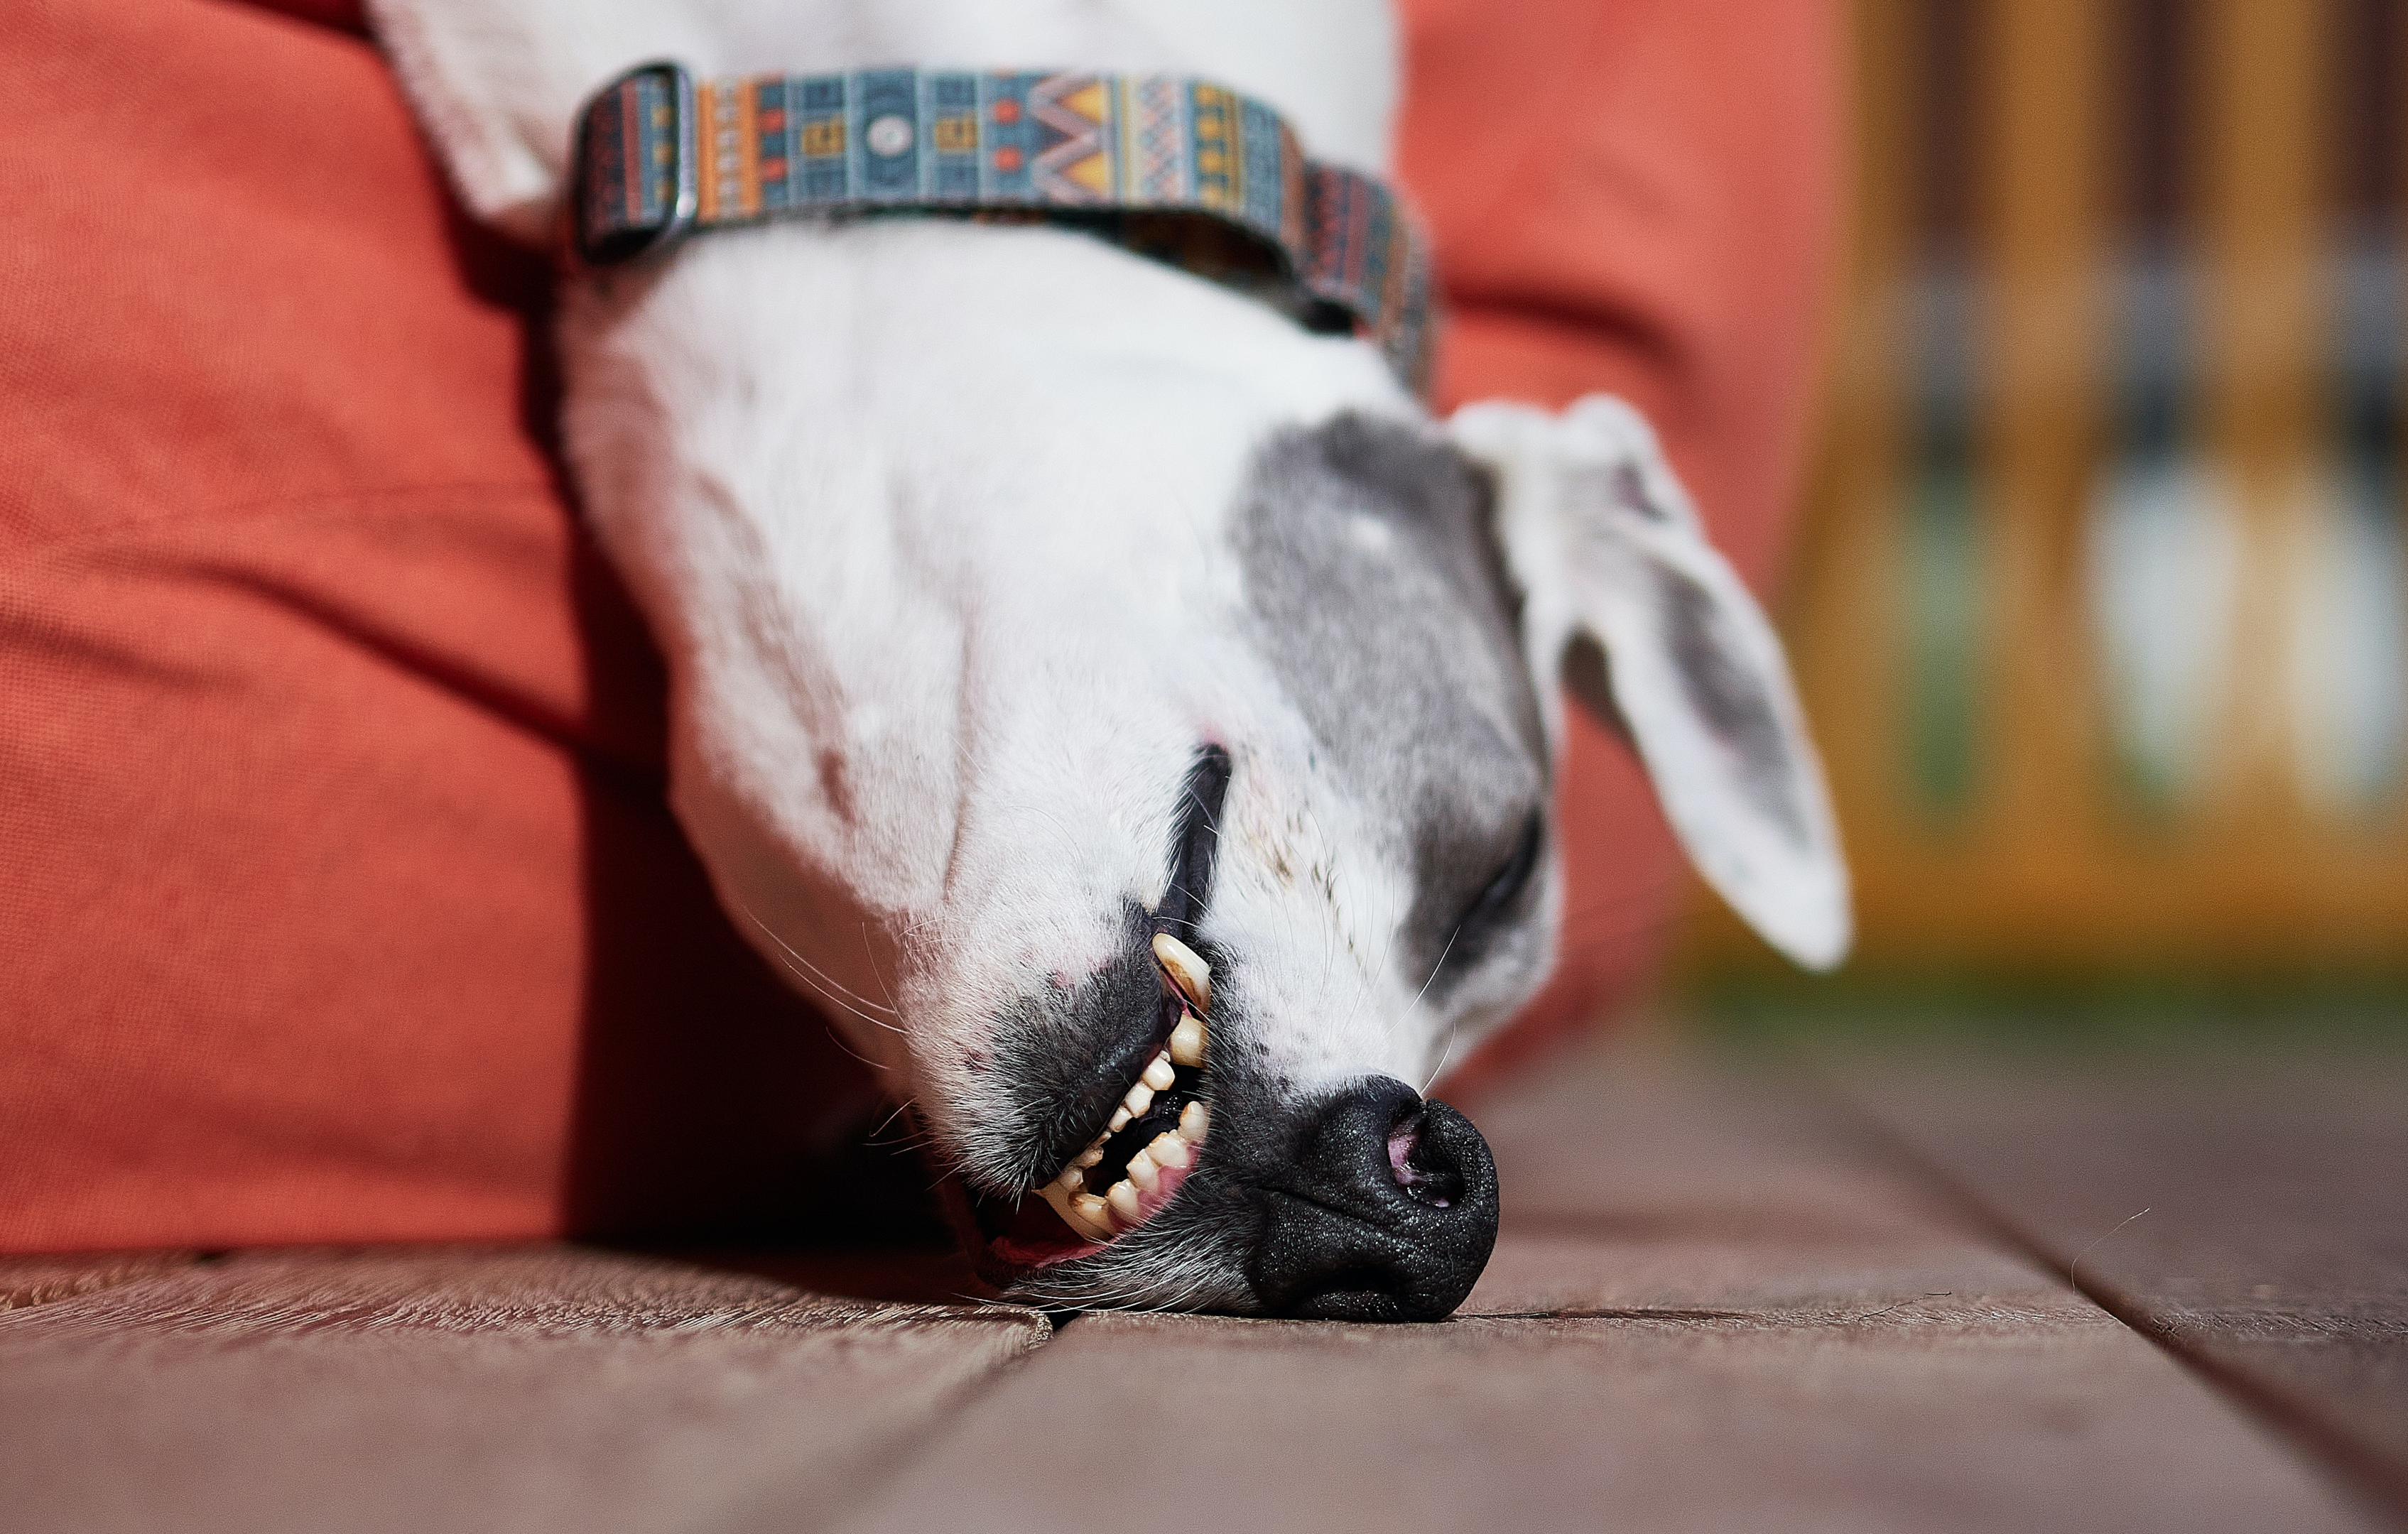 Sleeping greyhound dog wearing a collar